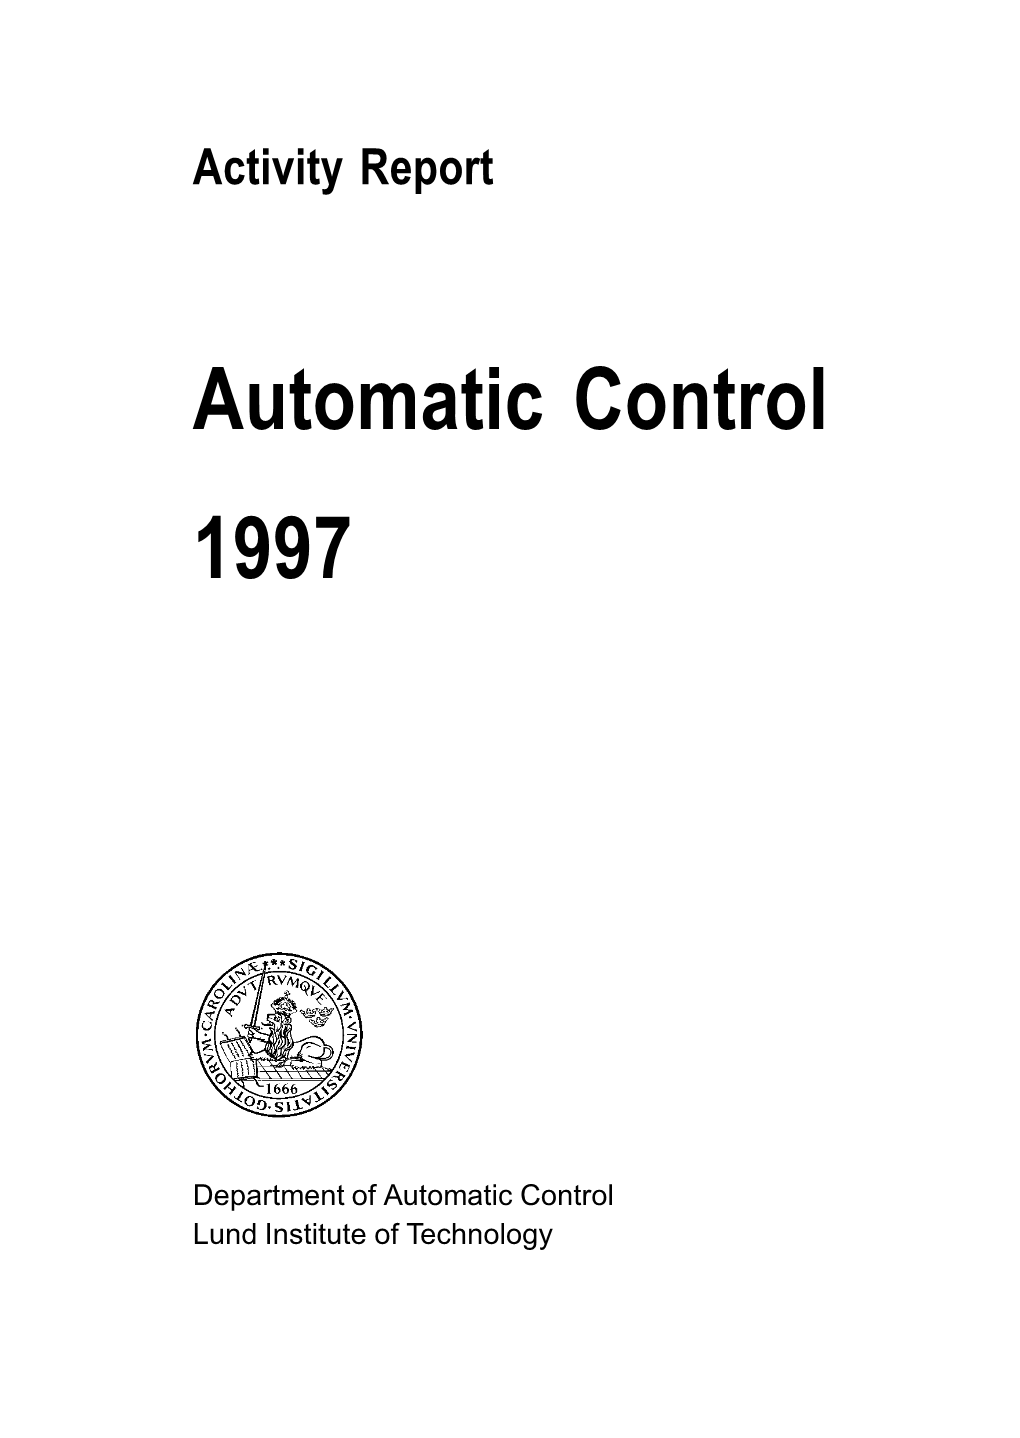 Automatic Control 1997